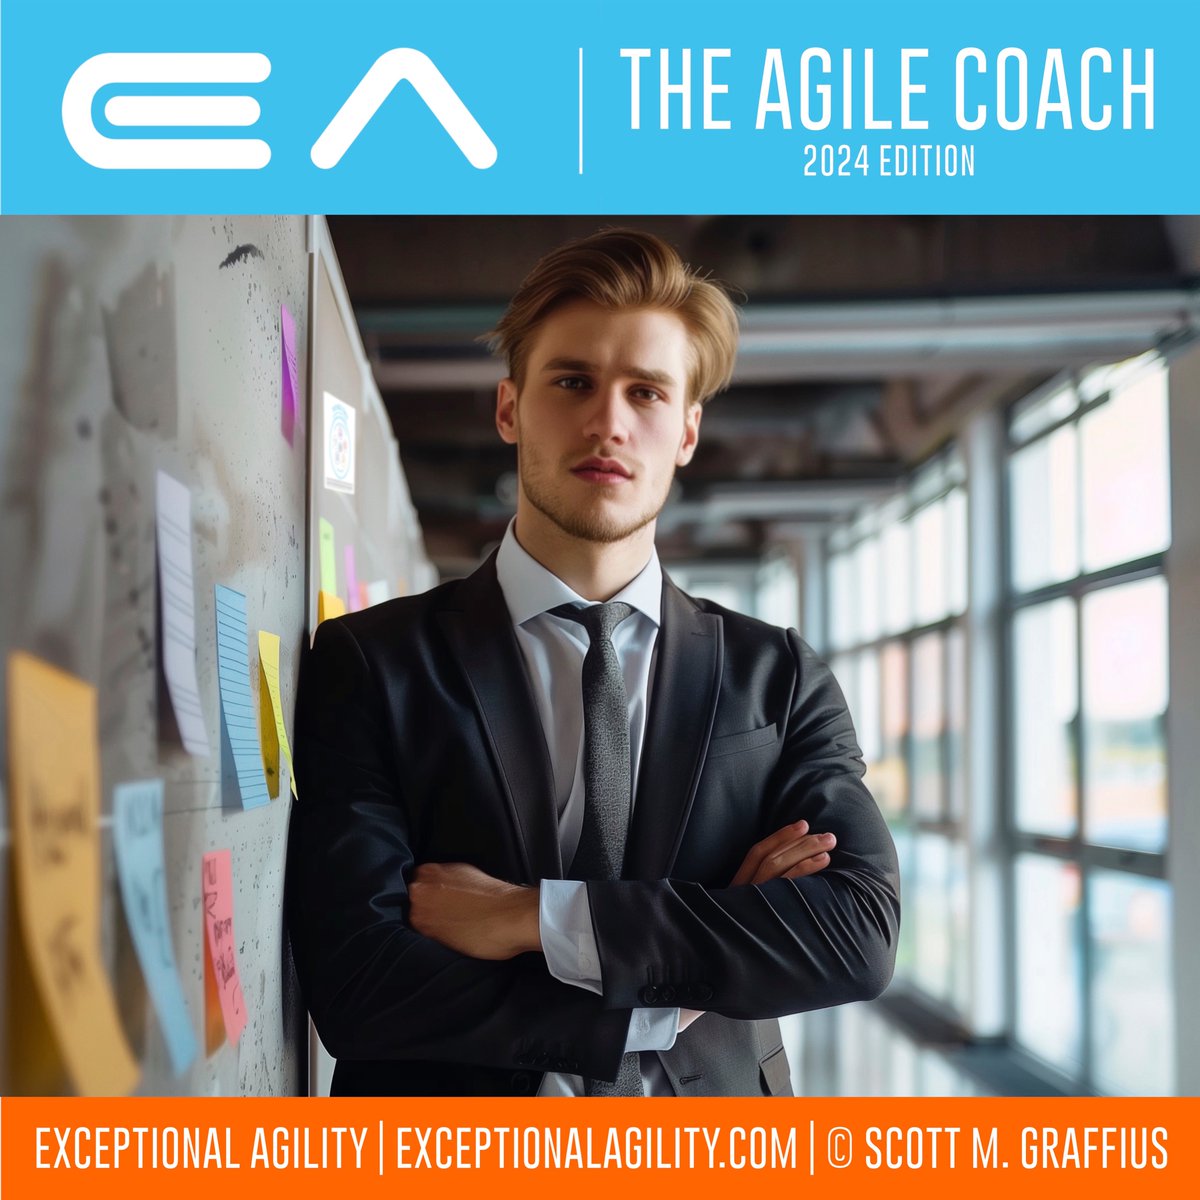 🆕 The Agile Coach: 2024 Edition

🔗 exceptionalagility.com/blog/files/the…

#Agile #AgileCoach #TheAgileCoach #AgileCoaches #AgileLeadership #ScrumMaster #AgileTransformation #ContinuousImprovement #AgileCommunity #AgileMindset #AgileTeam #AgileTraining #AgileCulture #ExceptionalAgility